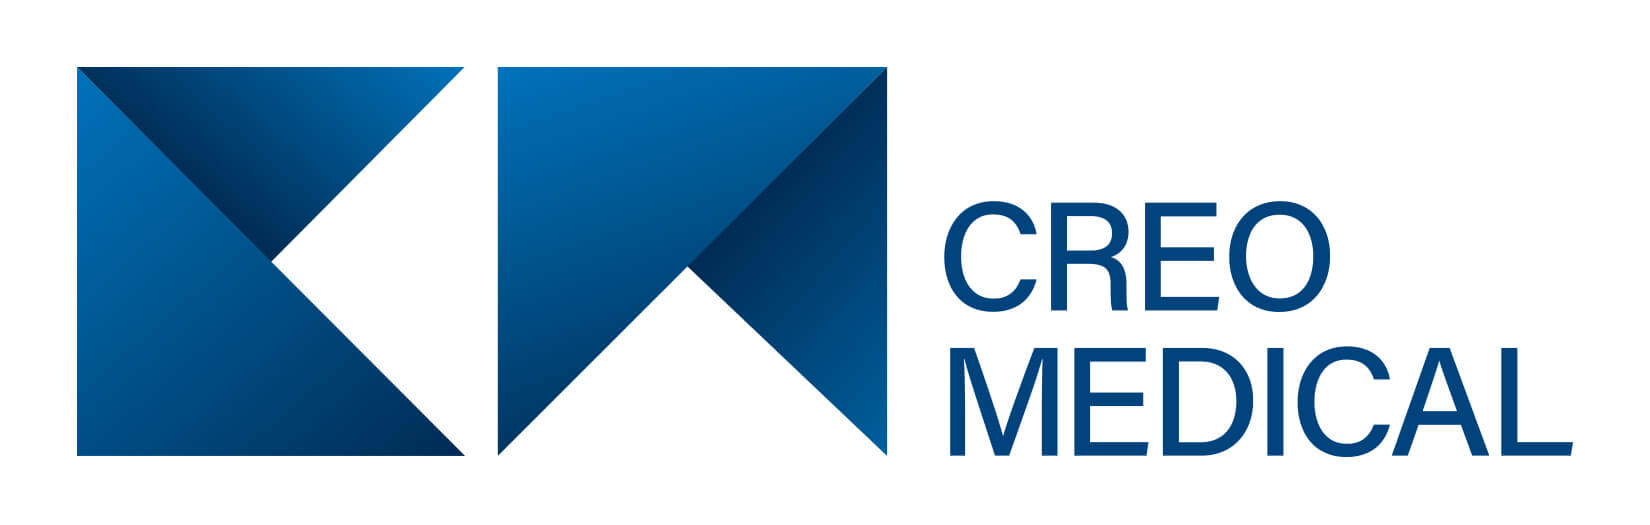 Creo Medical Ltd